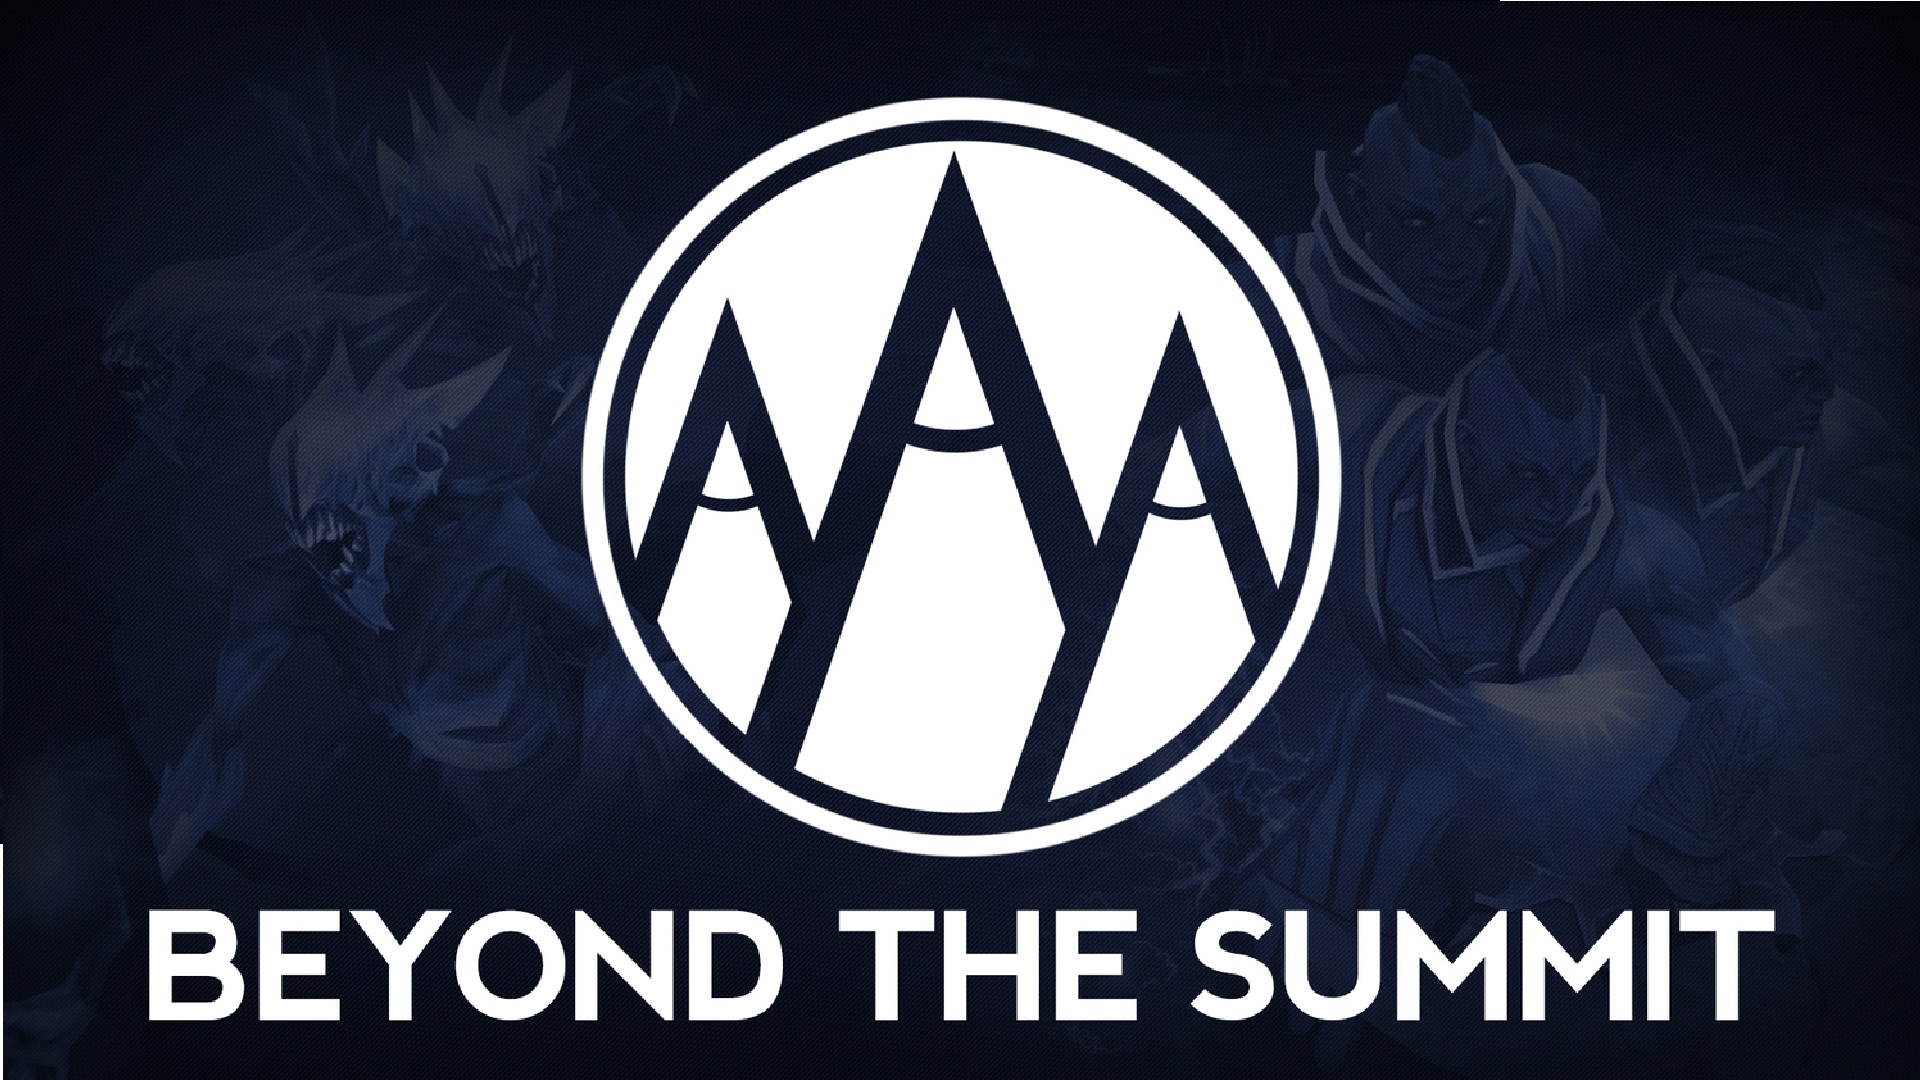 Beyond the Summit анонсировала 13 турнир для Азии и Америки